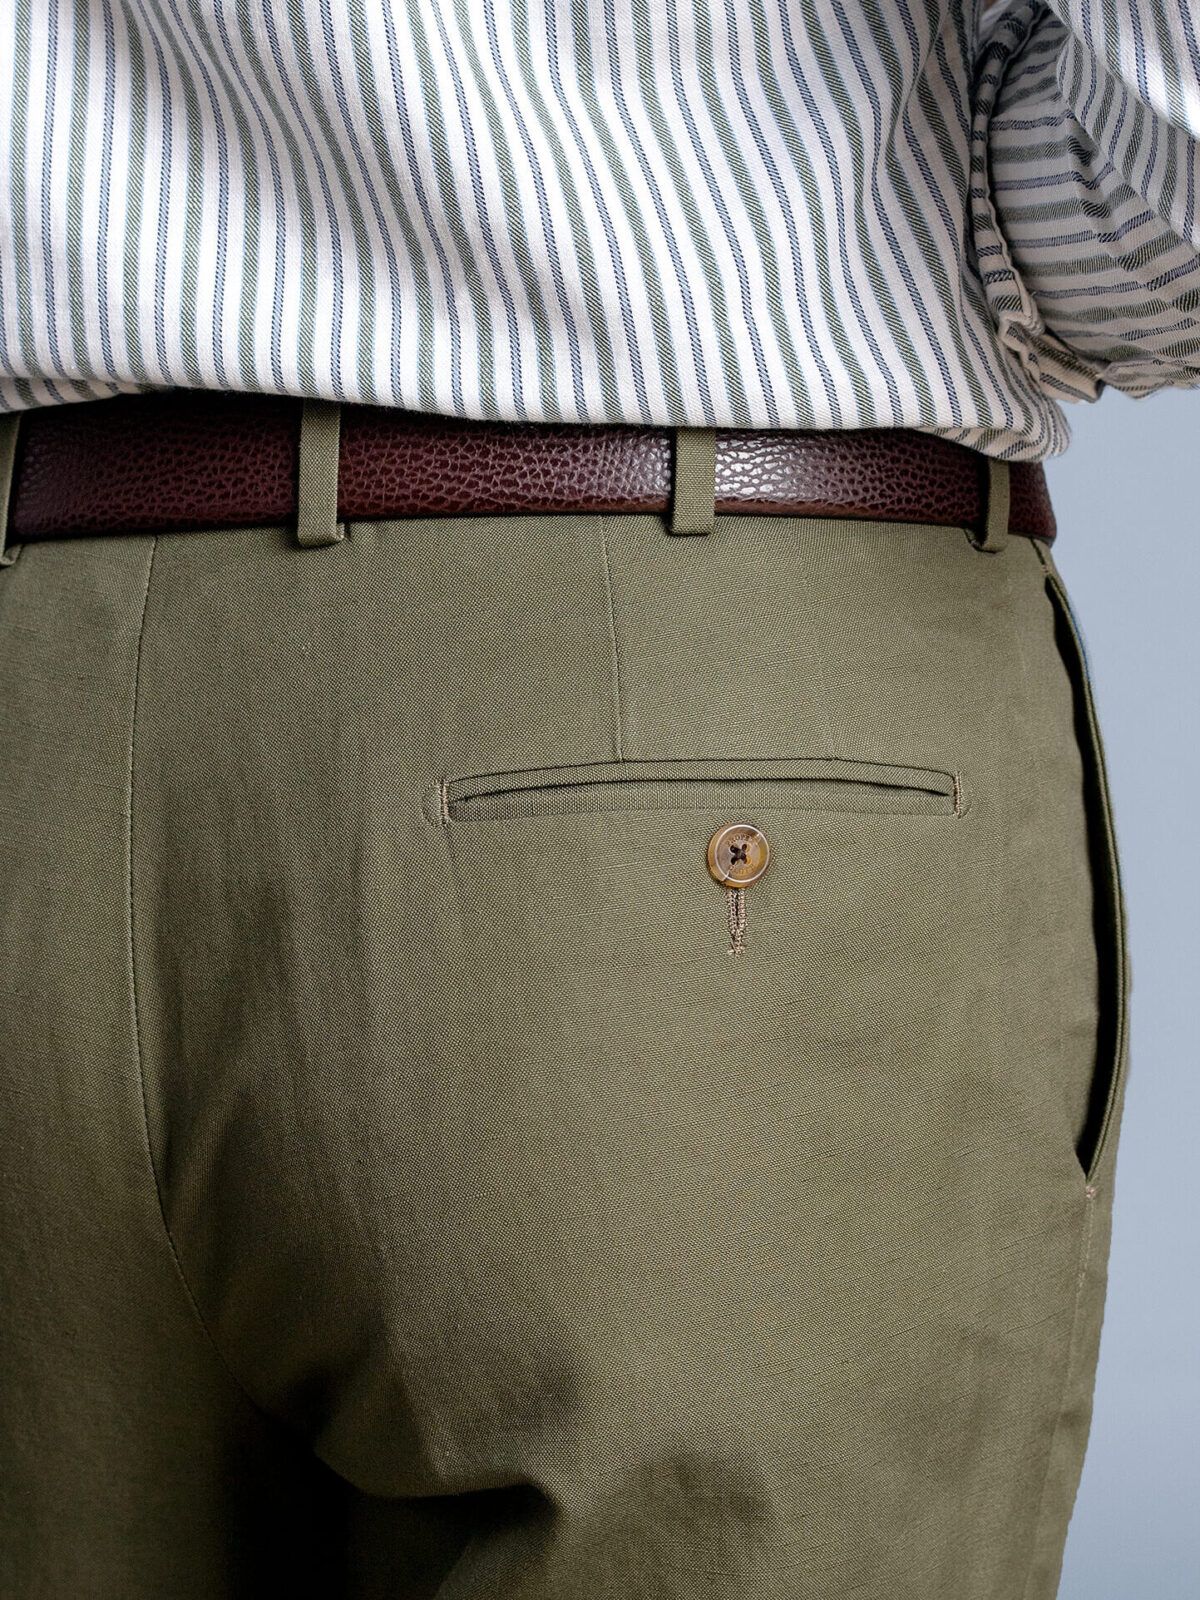 Beggi Slim-Fit Cotton Pants in Stone | Slim fit cotton pants, Slim fit dress  pants, Best mens pants